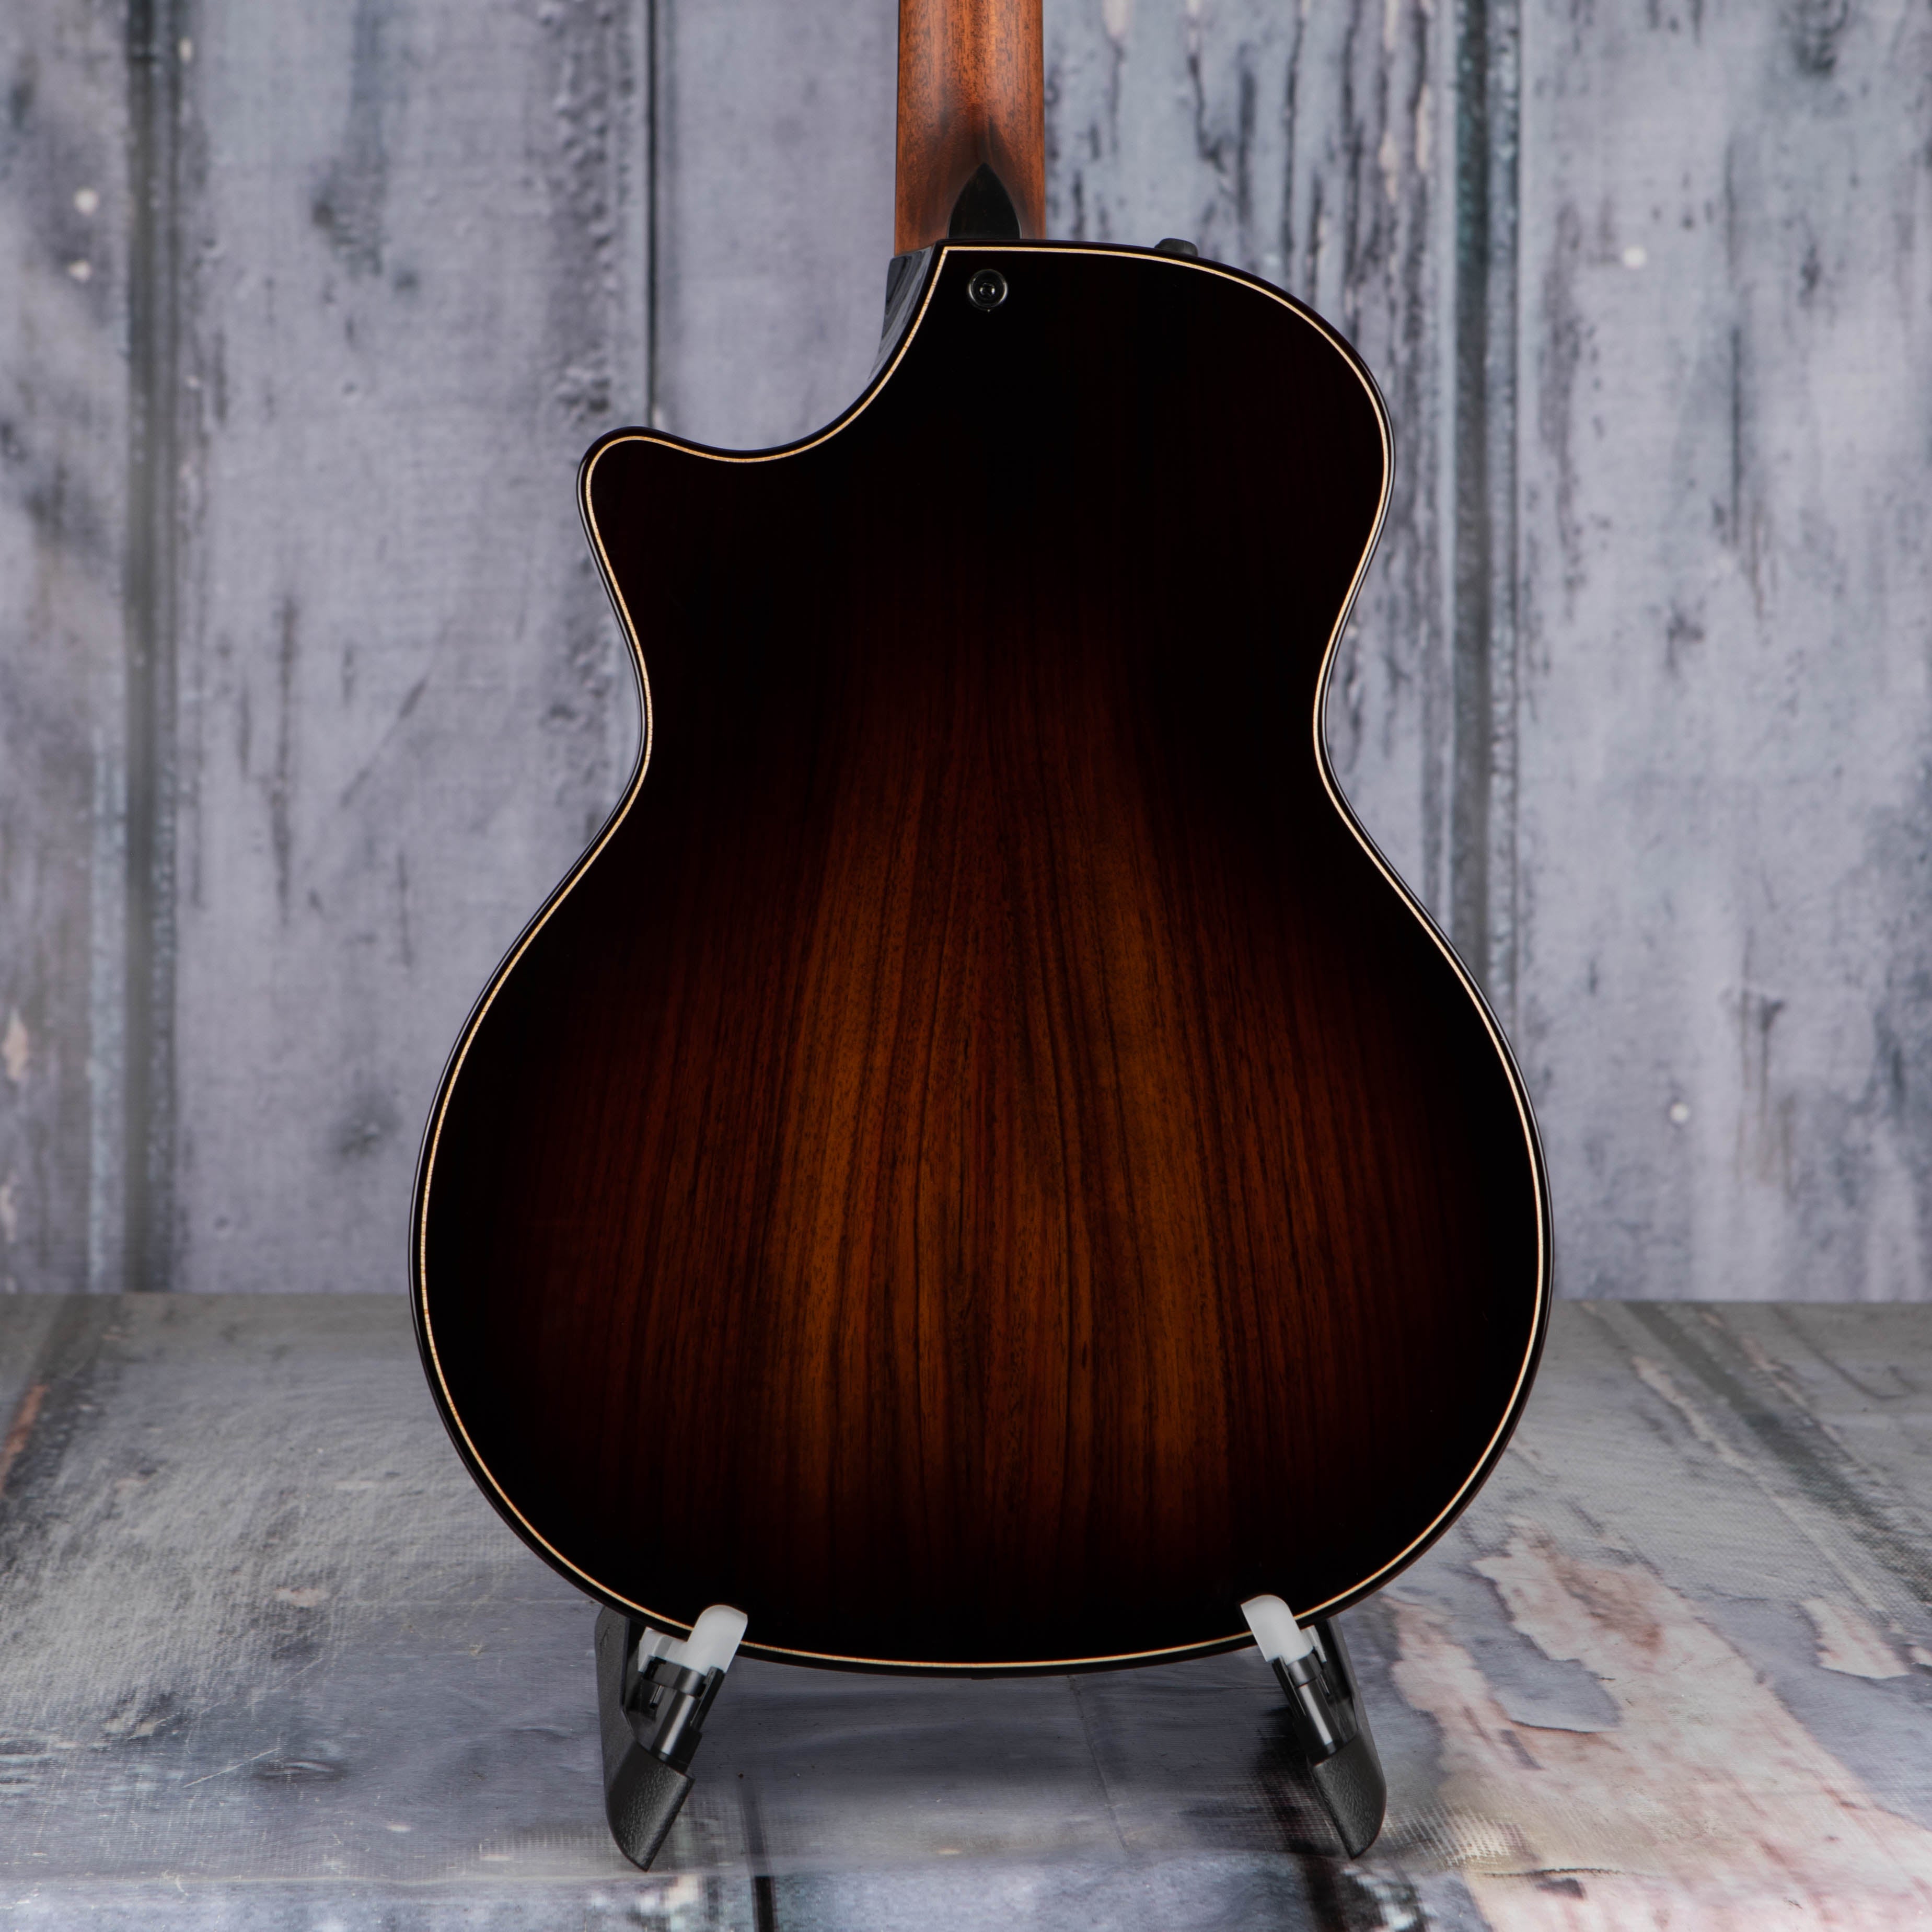 Taylor 50th Anniversary Builder's Edition 814ce LTD Acoustic/Electric Guitar, Kona Edgeburst, back closeup